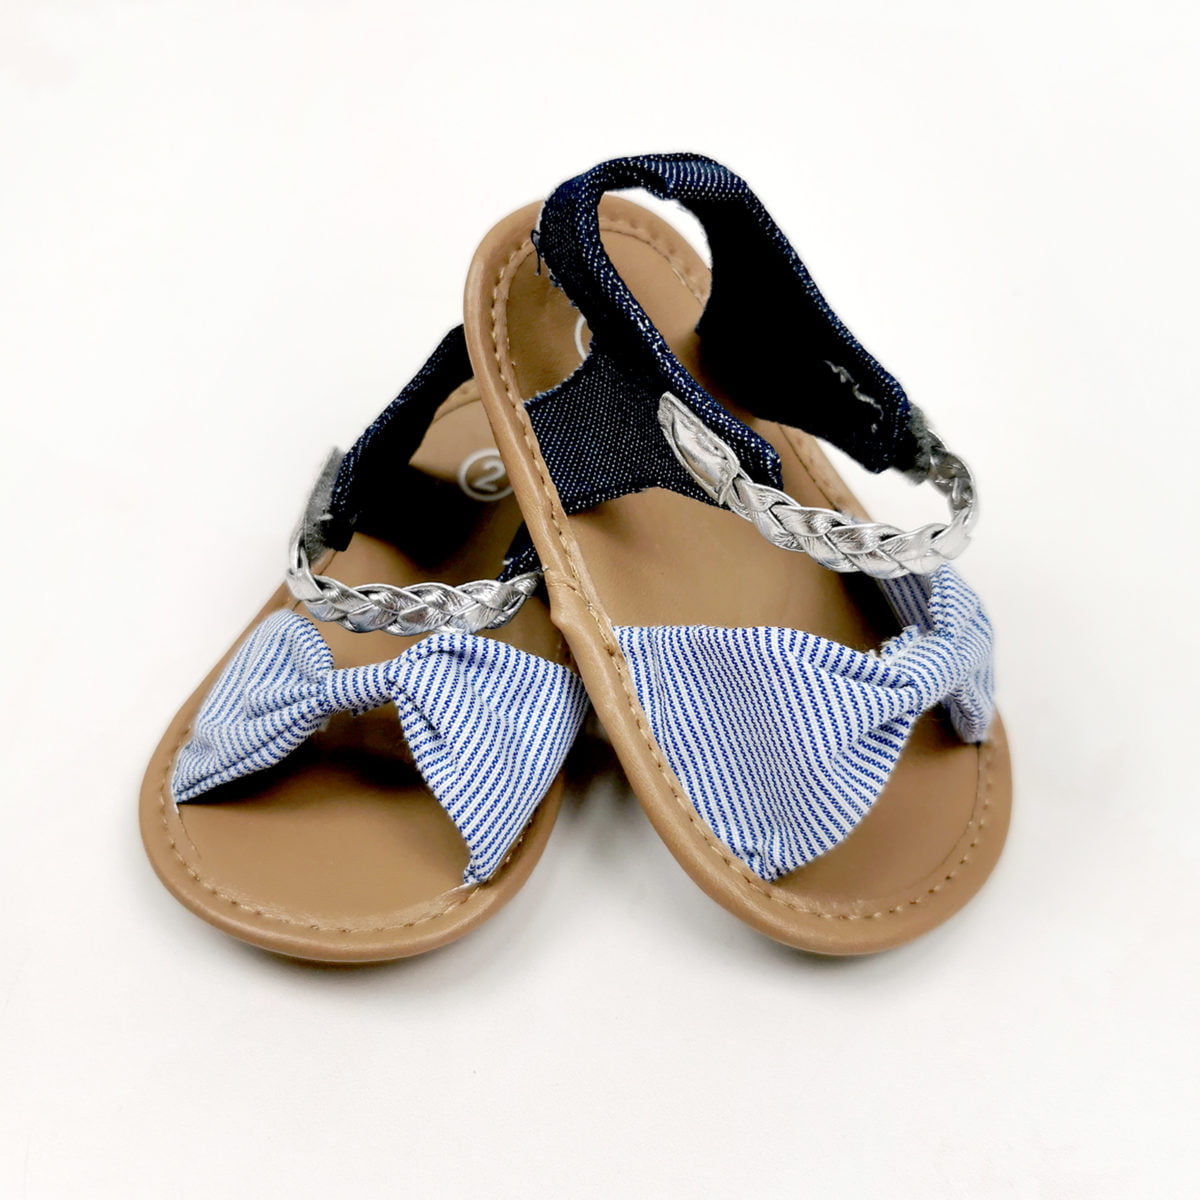 plave sandalice za djevojčice